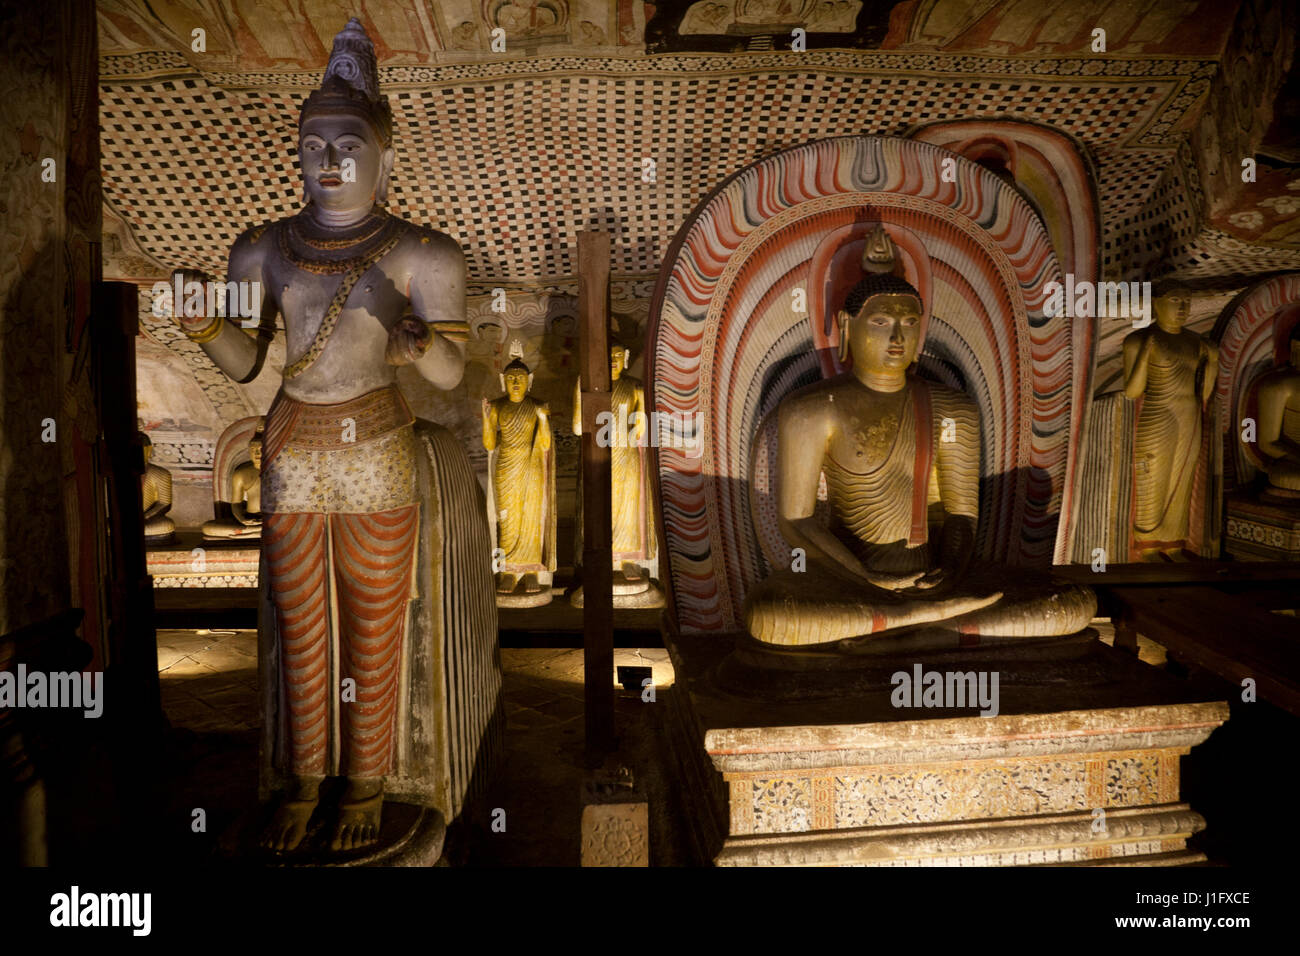 Dambulla Sri Lanka Dambulla Höhlentempel - Höhle II Maharaja Viharaya Statue des sitzenden Buddha In Dhyana Mudra Stockfoto